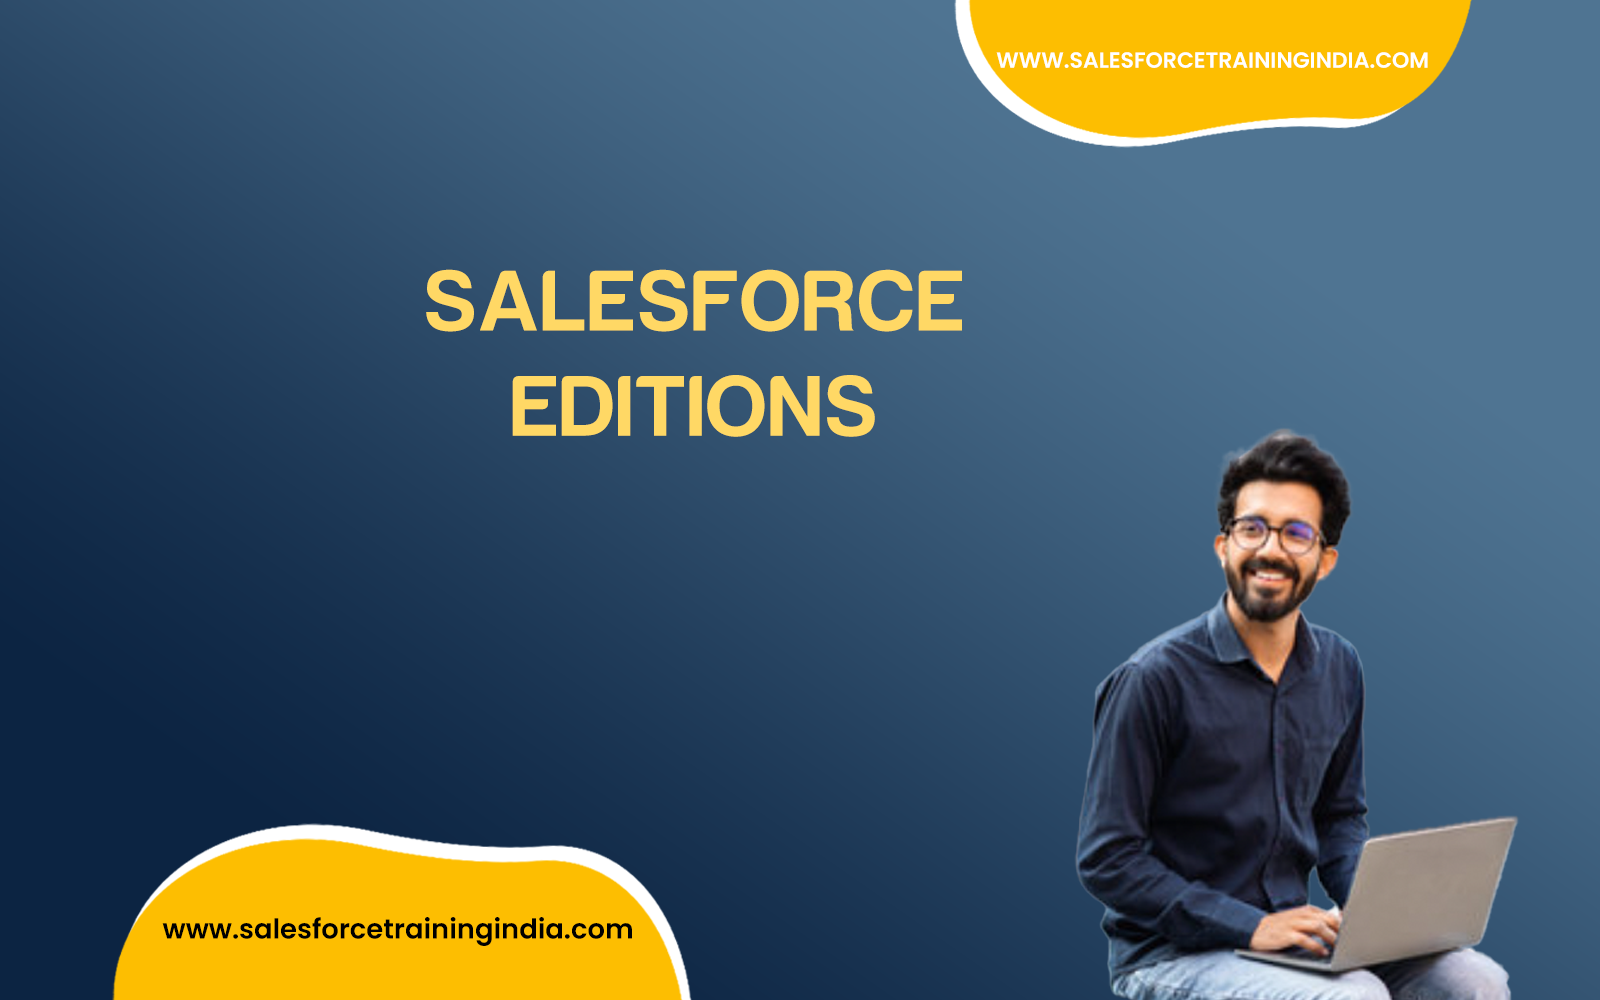 Salesforce editions